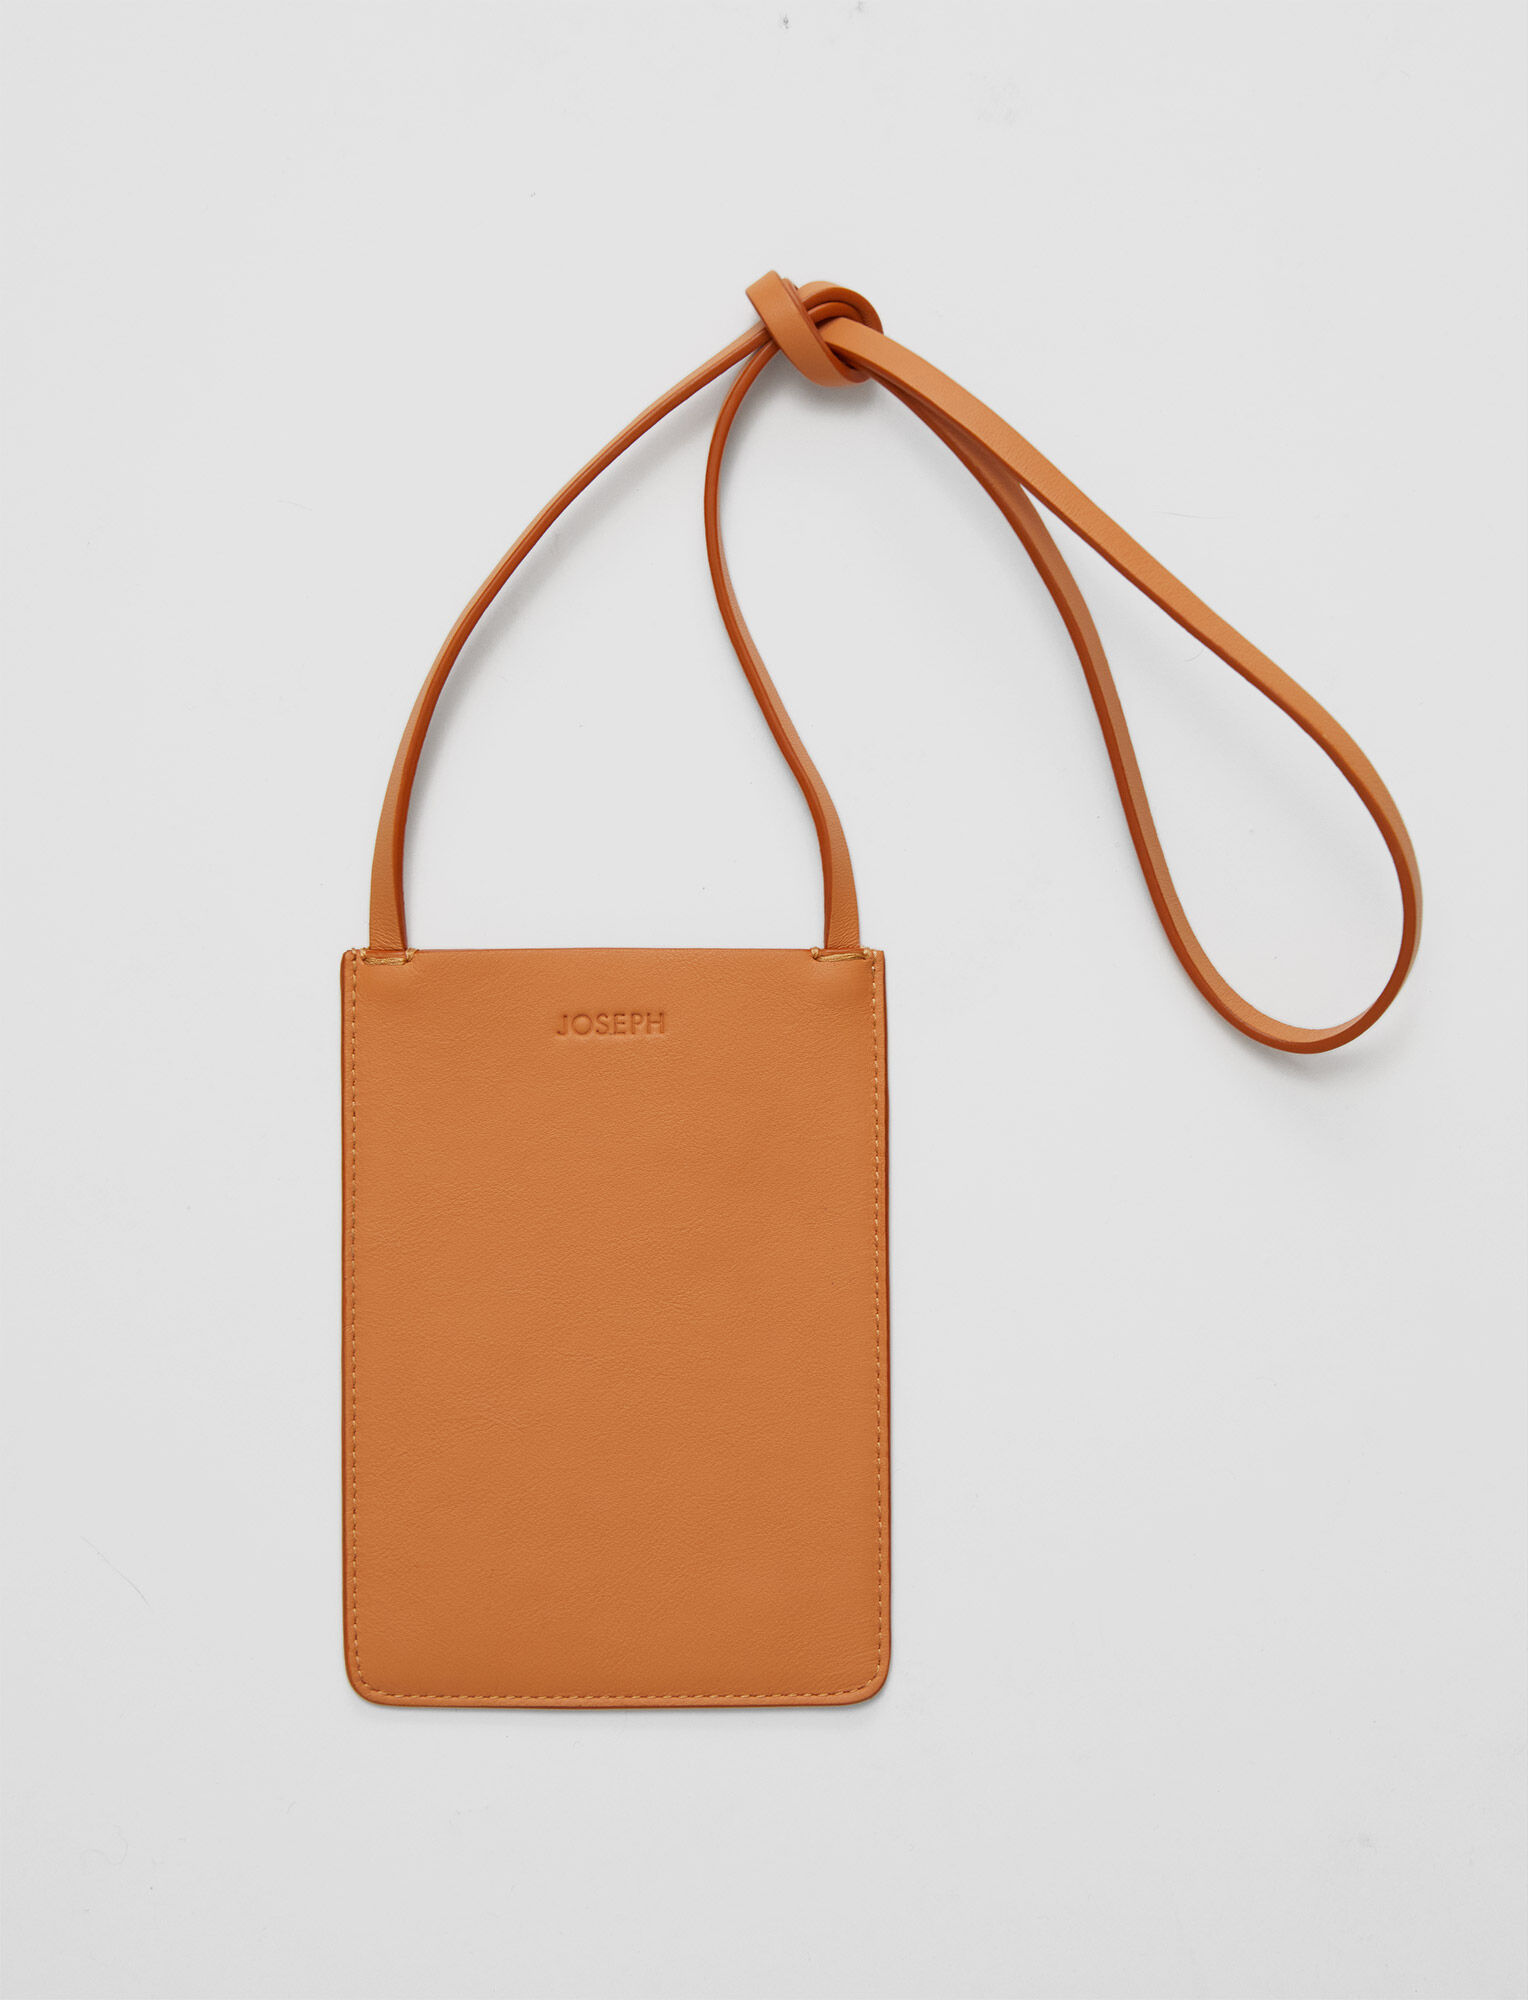 Joseph, Leather Pocket Bag, in Caramel